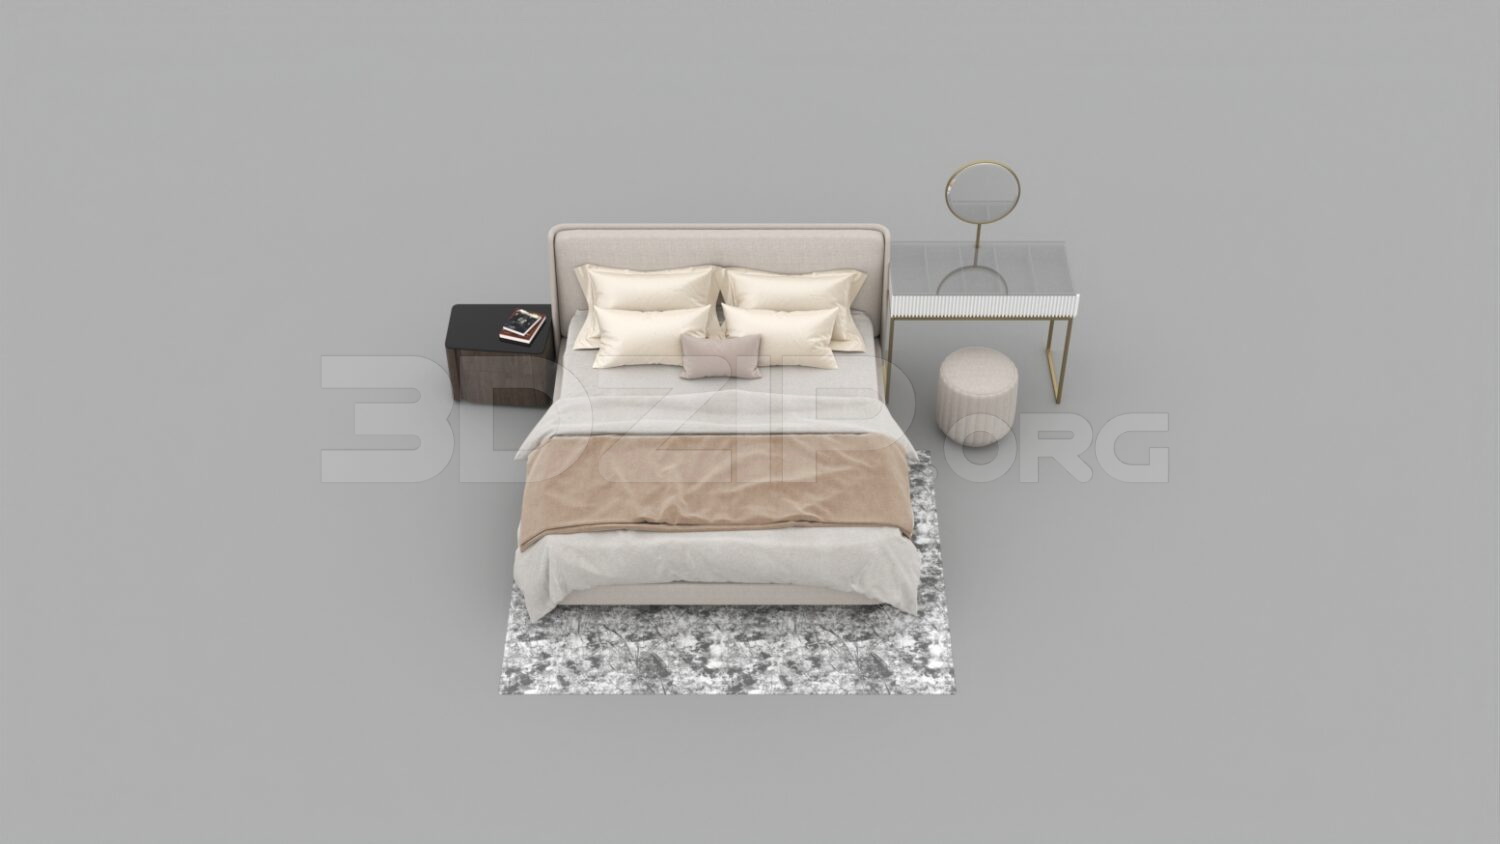 2813. Free 3D Bed Model Download